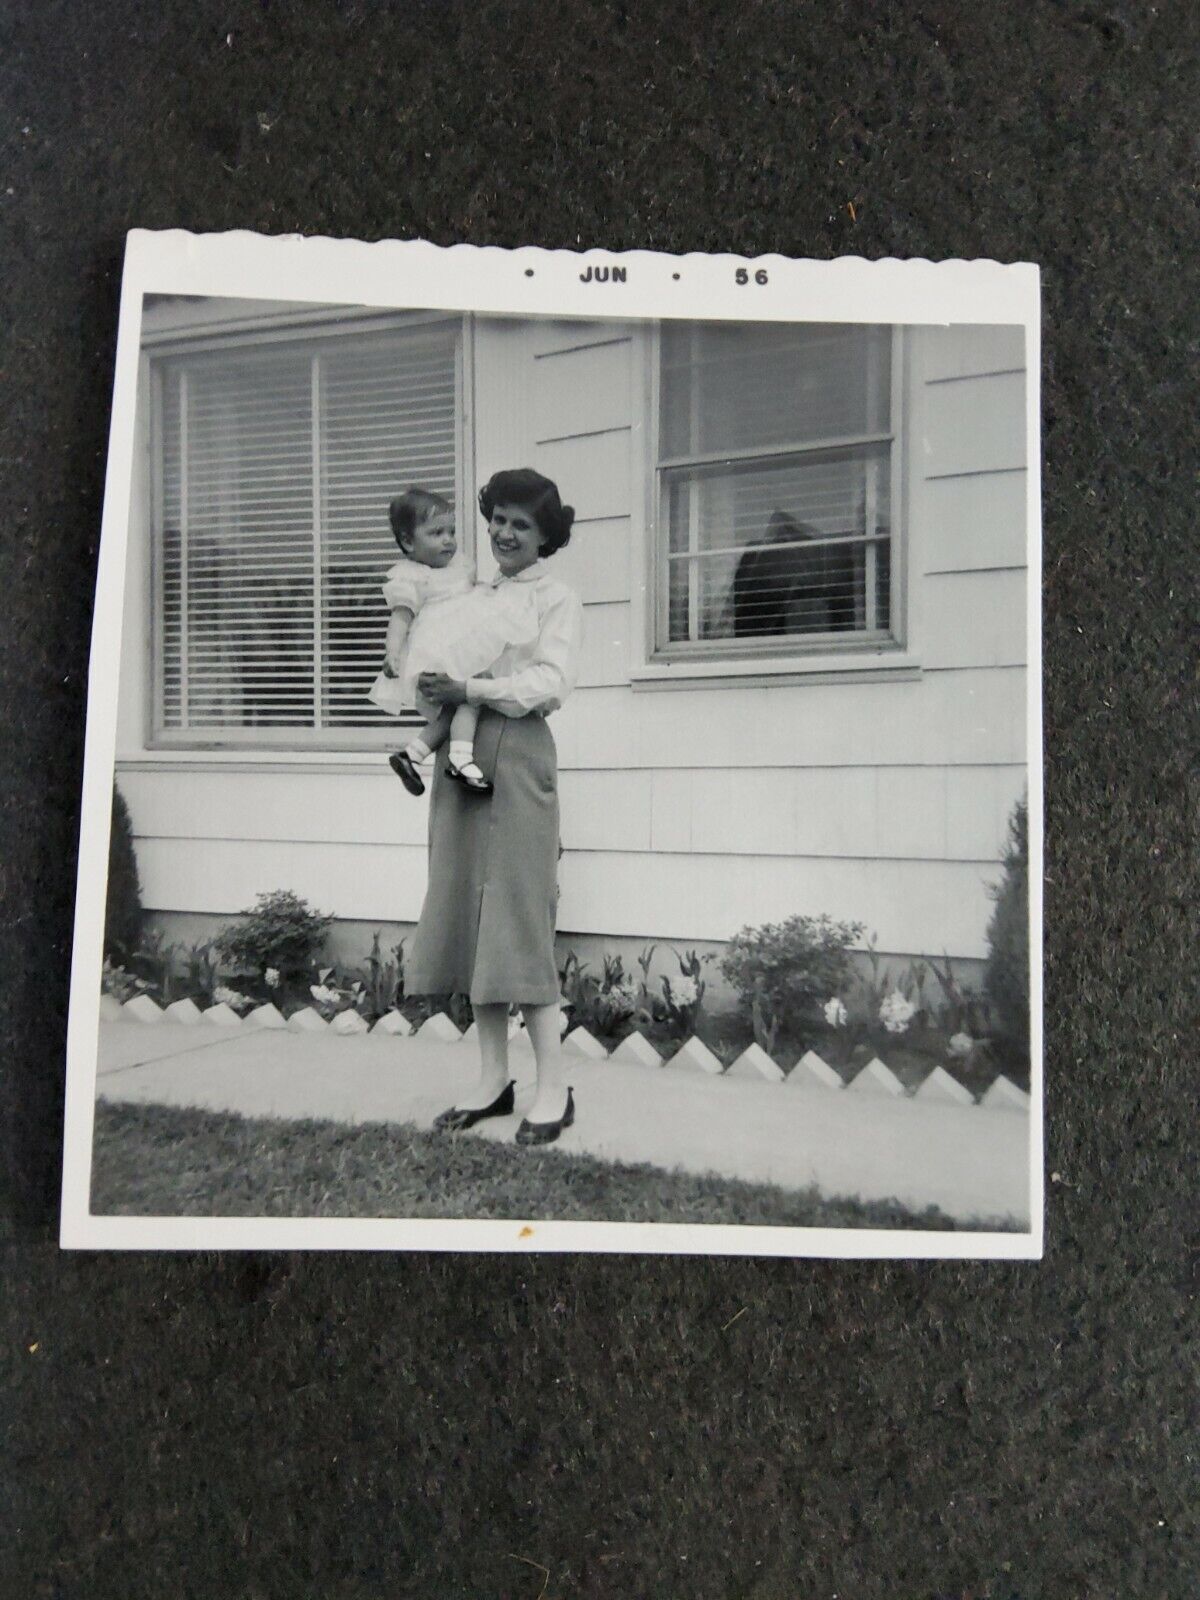 Vintage Press Photo Black & White Woman and Child Ohio June 1956 3.25